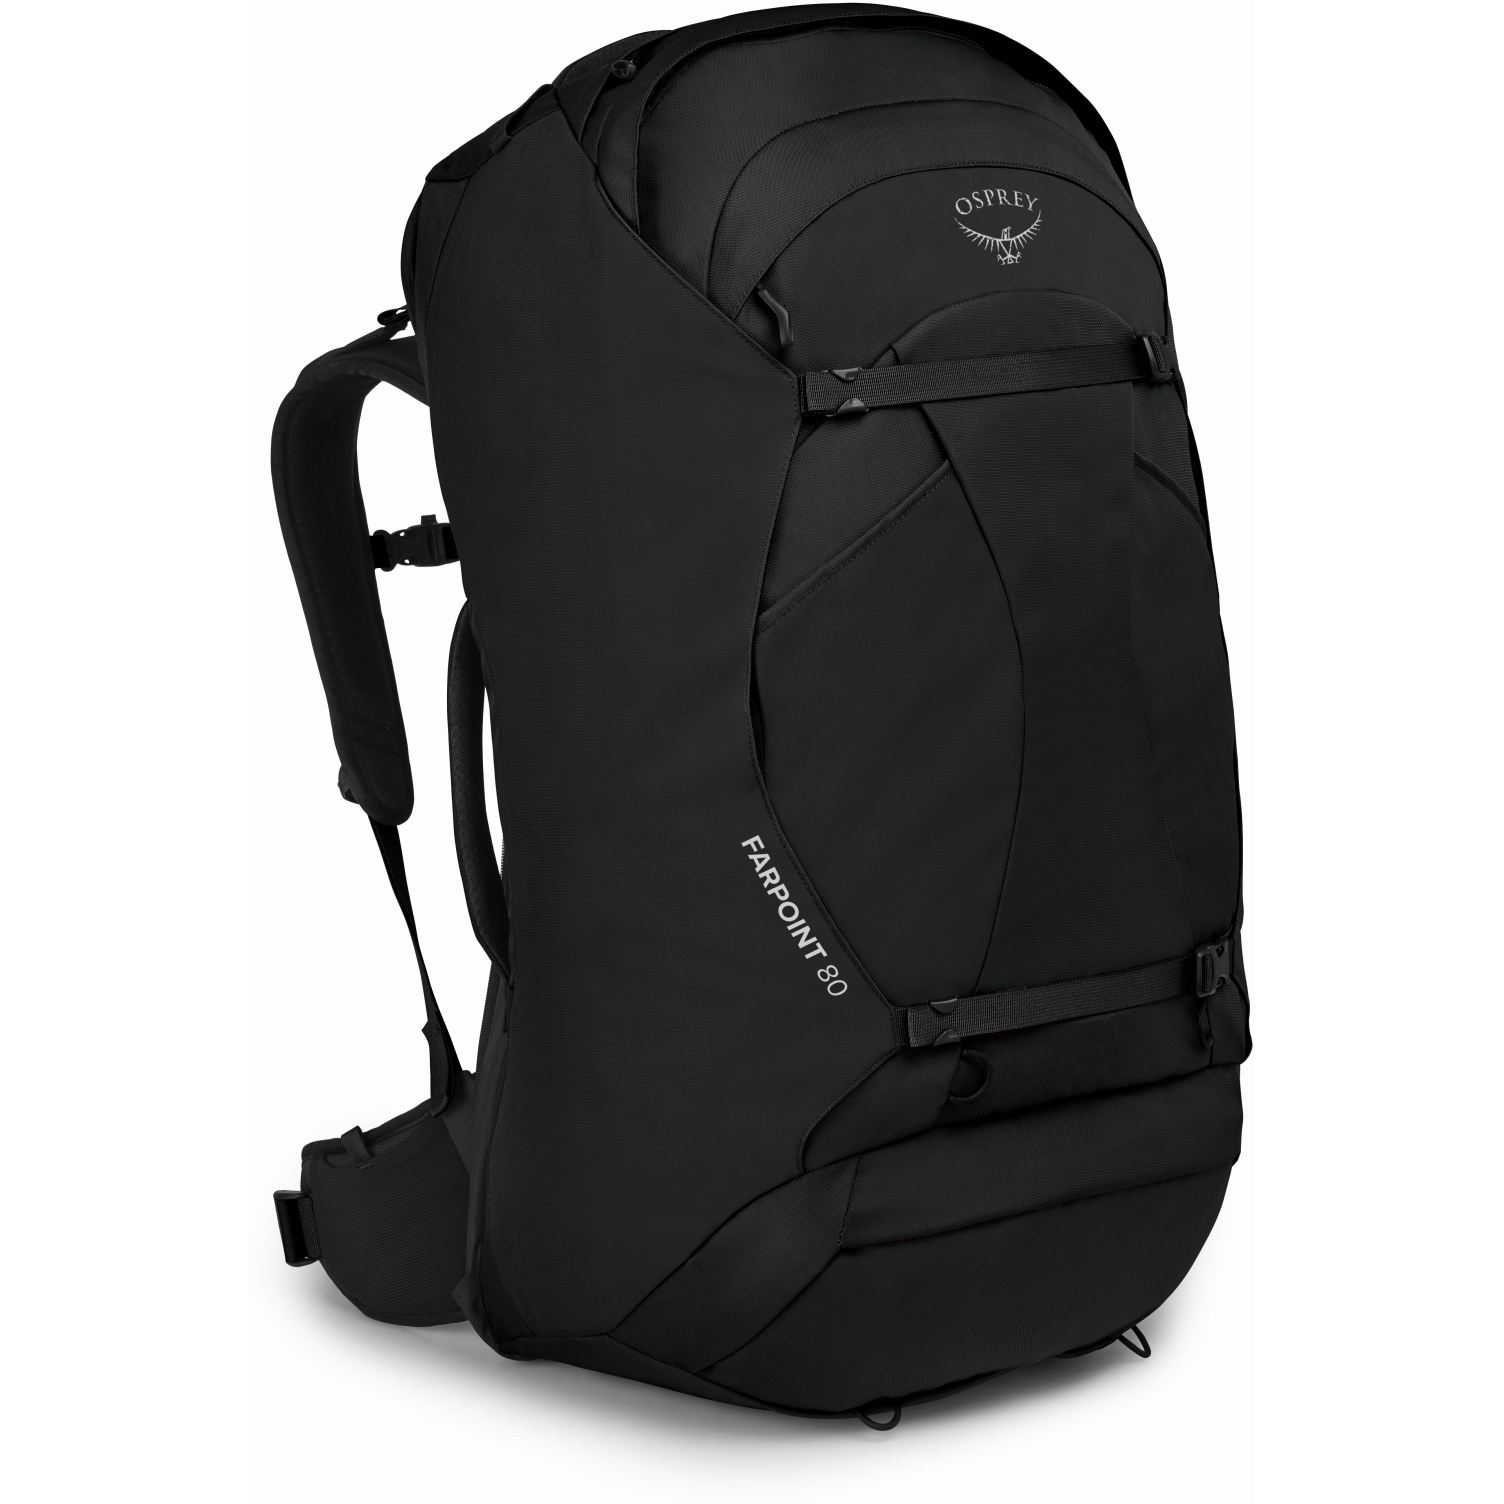 Productfoto van Osprey Farpoint 80 Backpack - Black